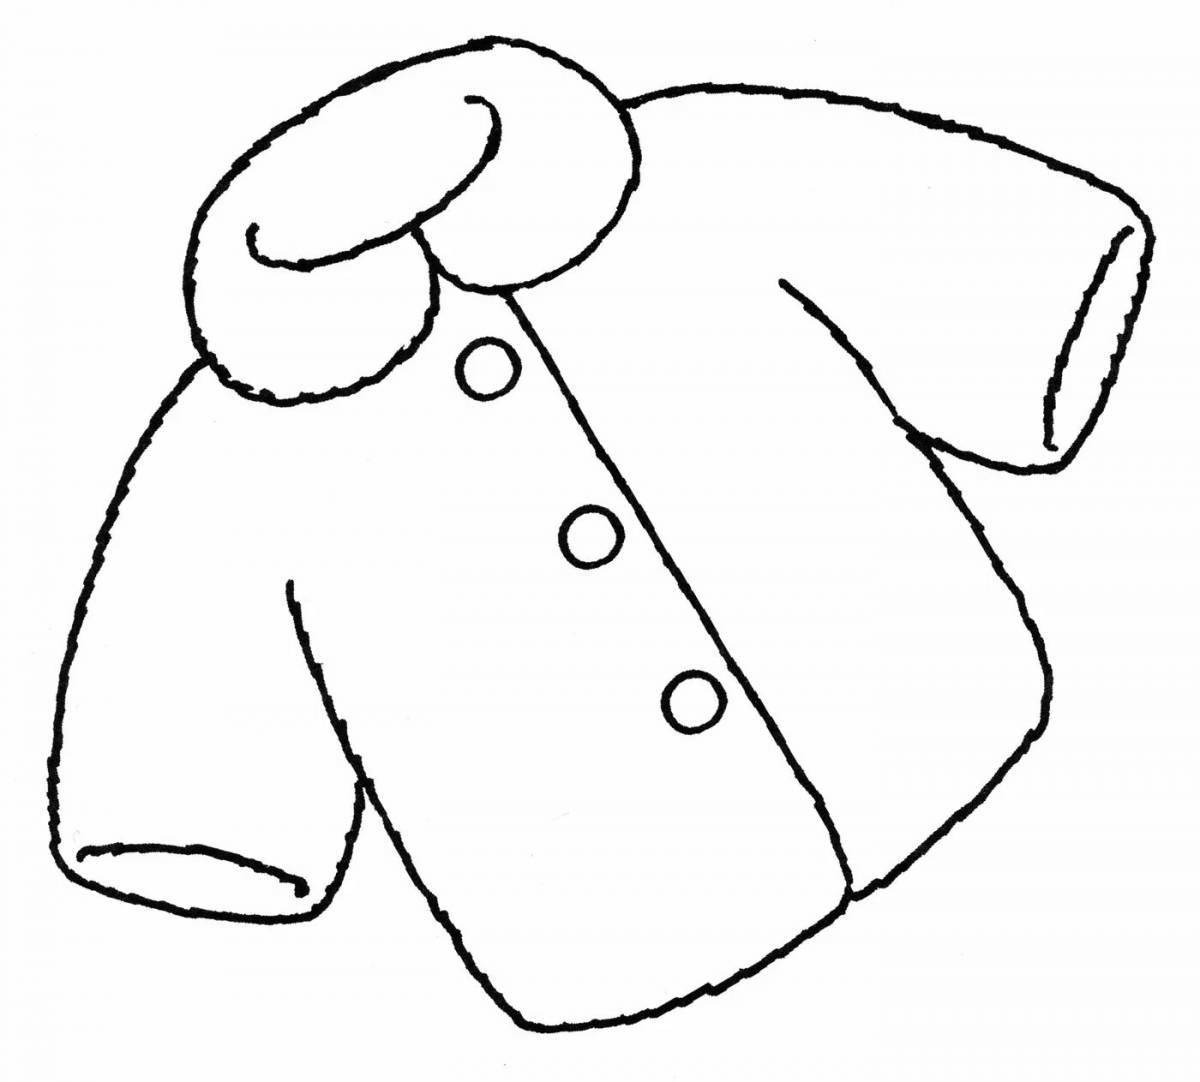 Adorable junior coat coloring page